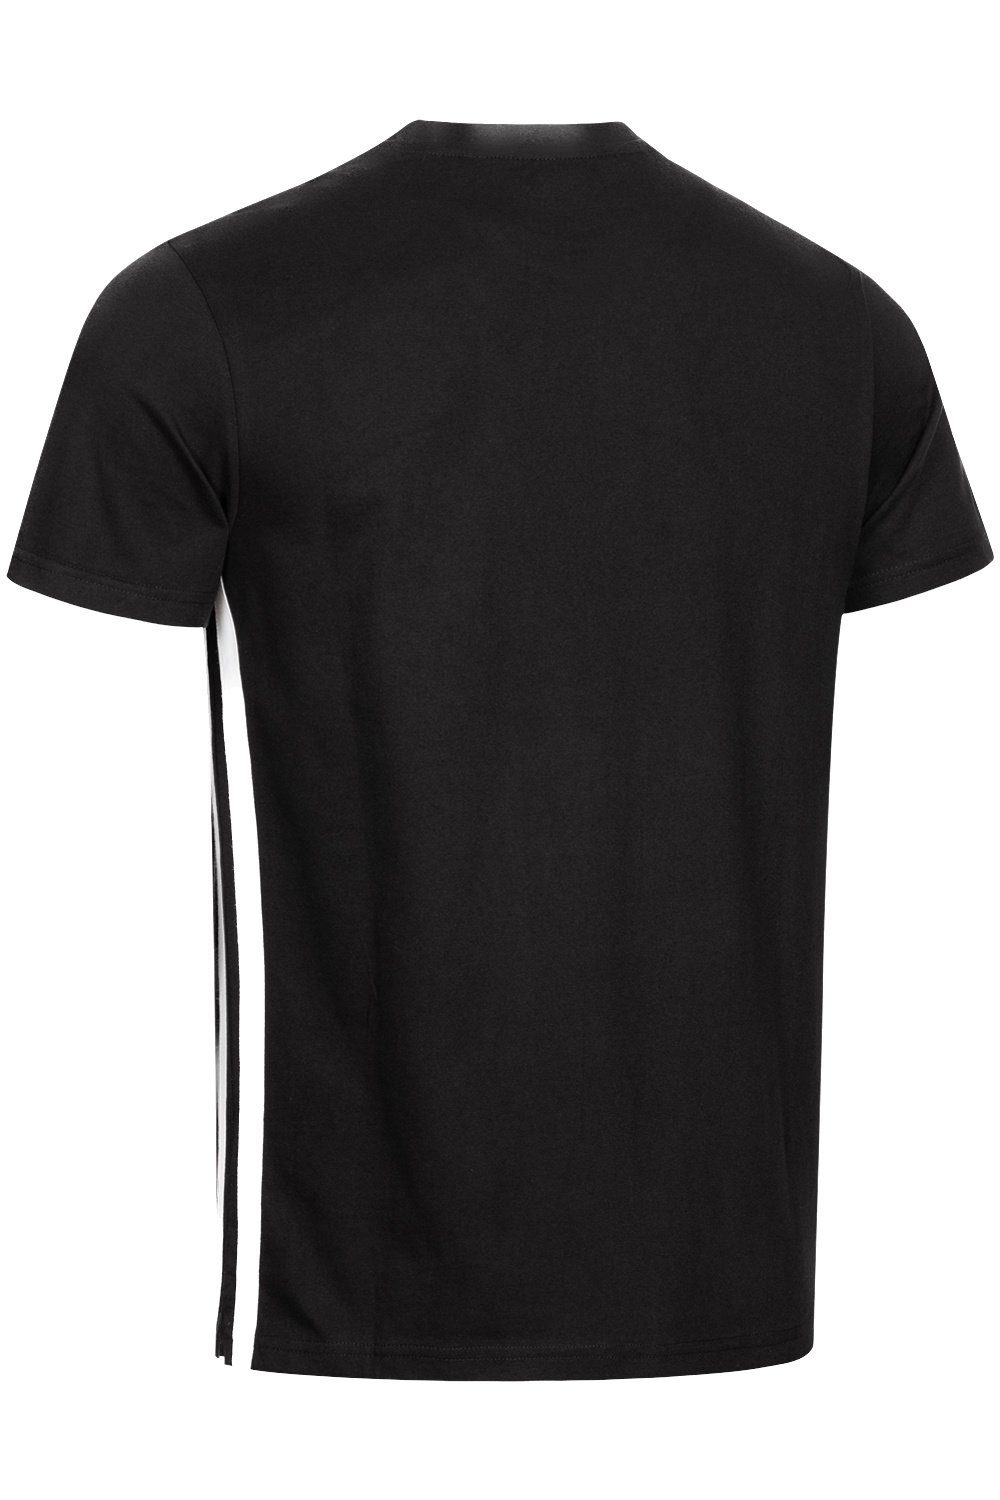 Lonsdale T-Shirt Lonsdale Herren SHEGRA Adult black/white T-Shirt